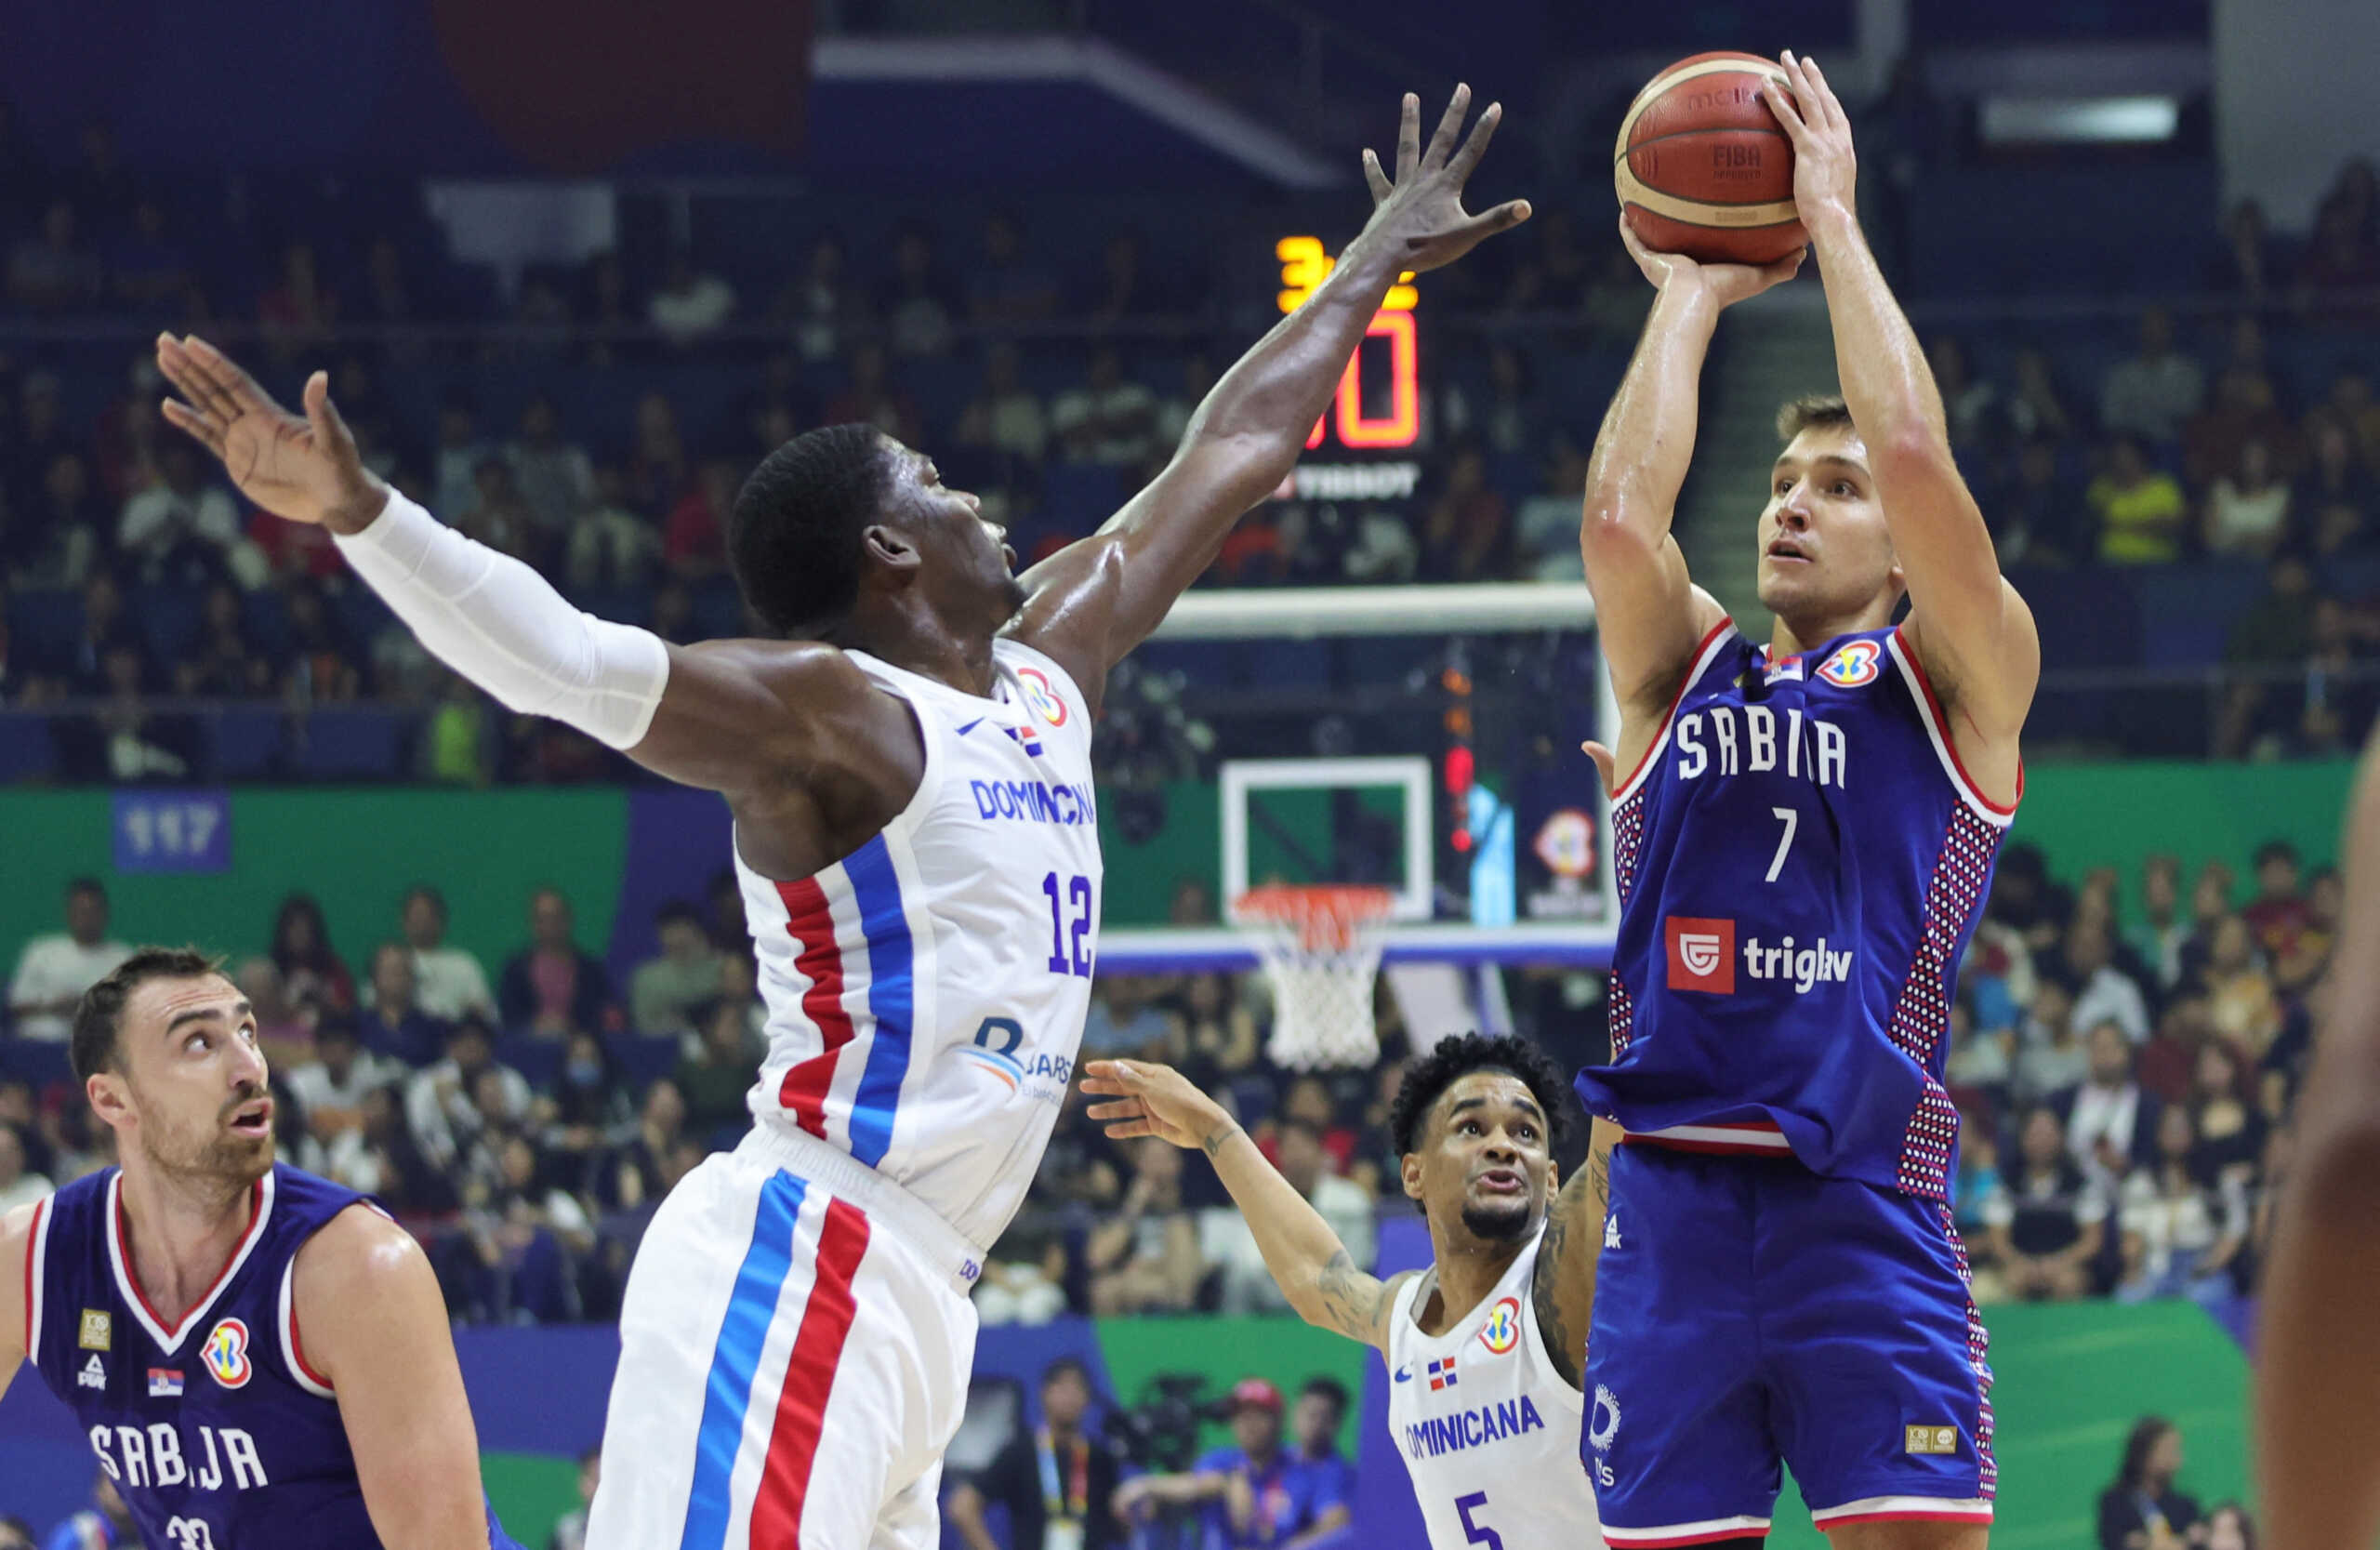 Mundobasket 2023: Η Σερβία έκανε «περίπατο» κόντρα στην Δομινικανή Δημοκρατία και προκρίθηκε στα προημιτελικά